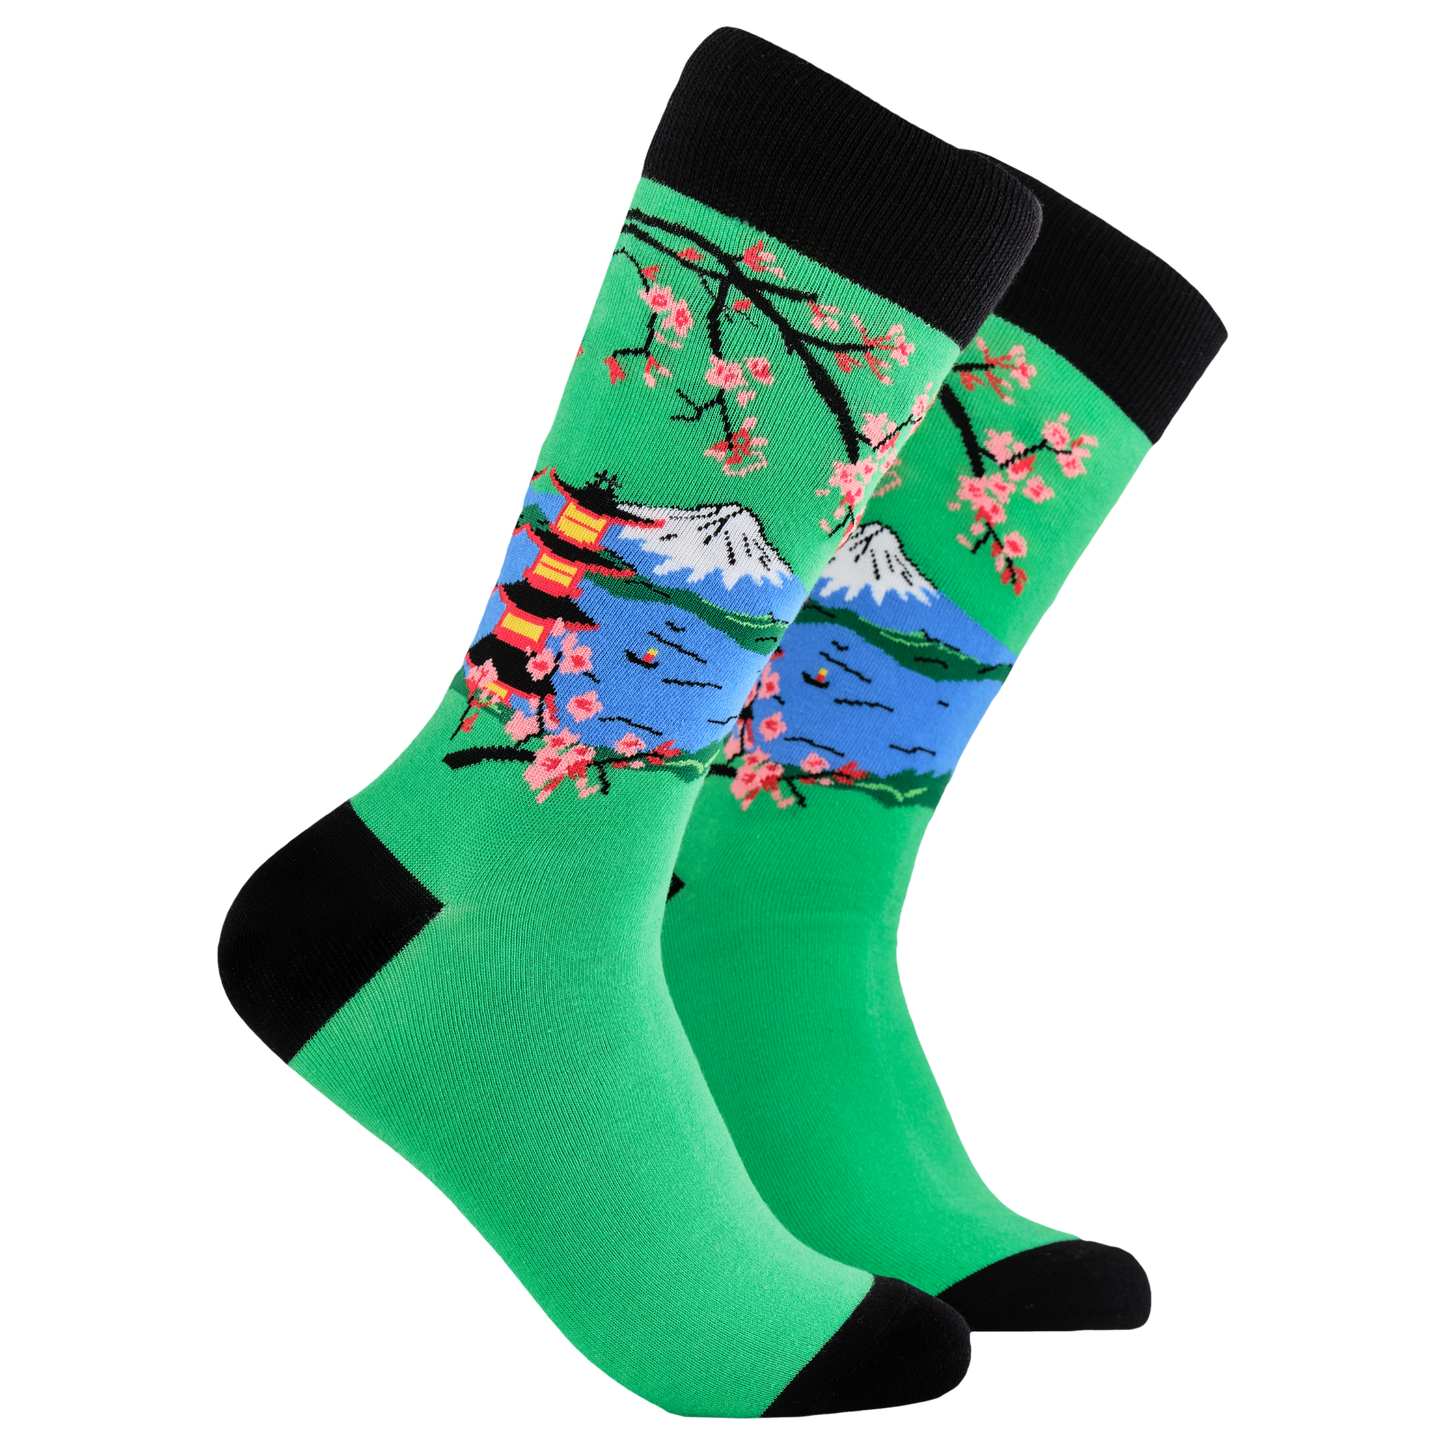 Japanese Socks - Mount Fuji. A pair of socks depicting mount fuji and cherry blossom. Green legs, black cuff, heel and toe.